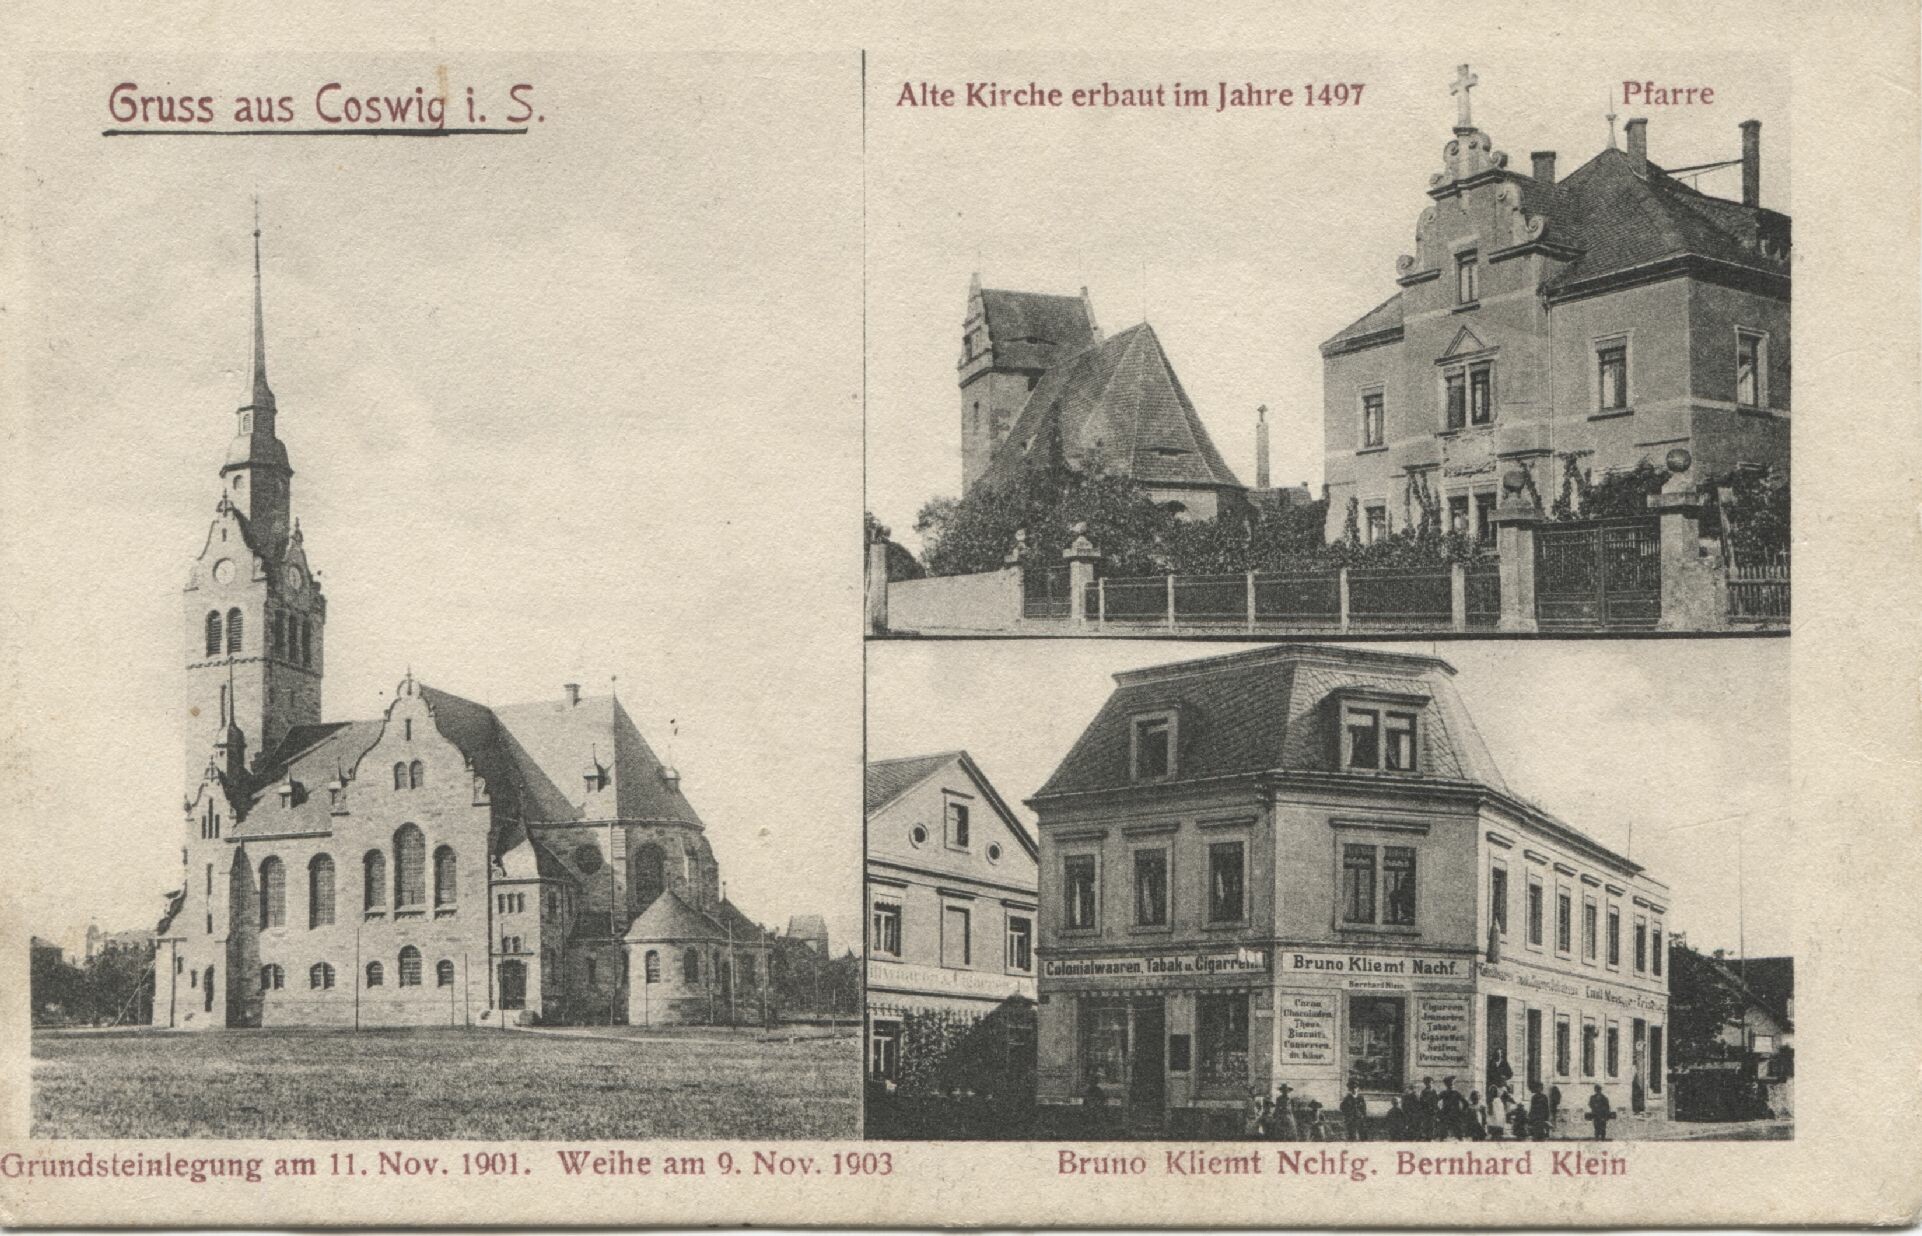 Postkarte: Mehrbildkarte "Gruss aus Coswig i.S." (Karrasburg Museum Coswig CC BY-NC-SA)